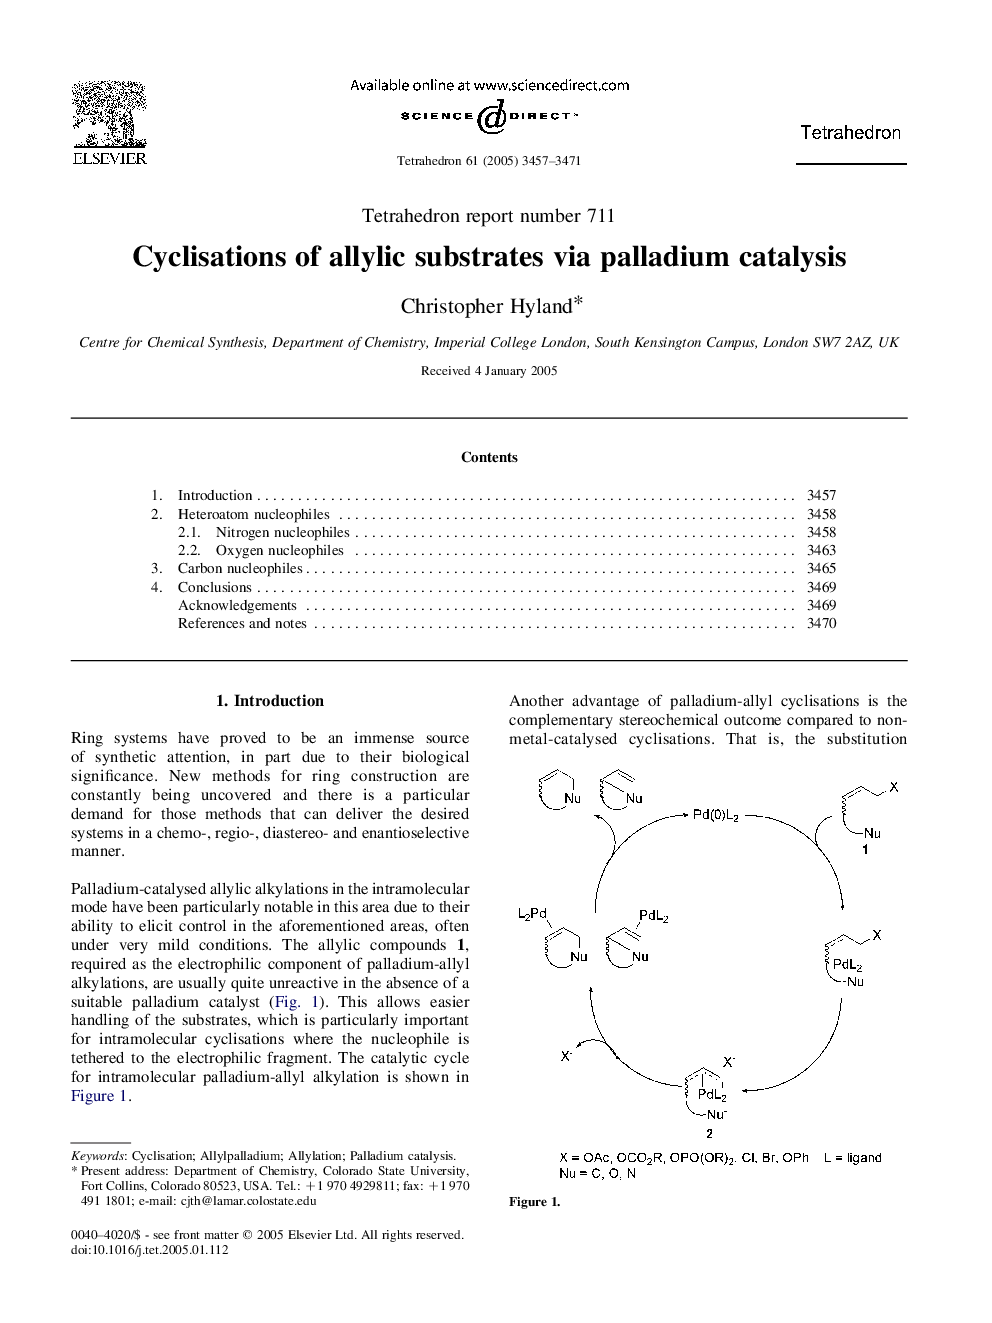 Cyclisations of allylic substrates via palladium catalysis